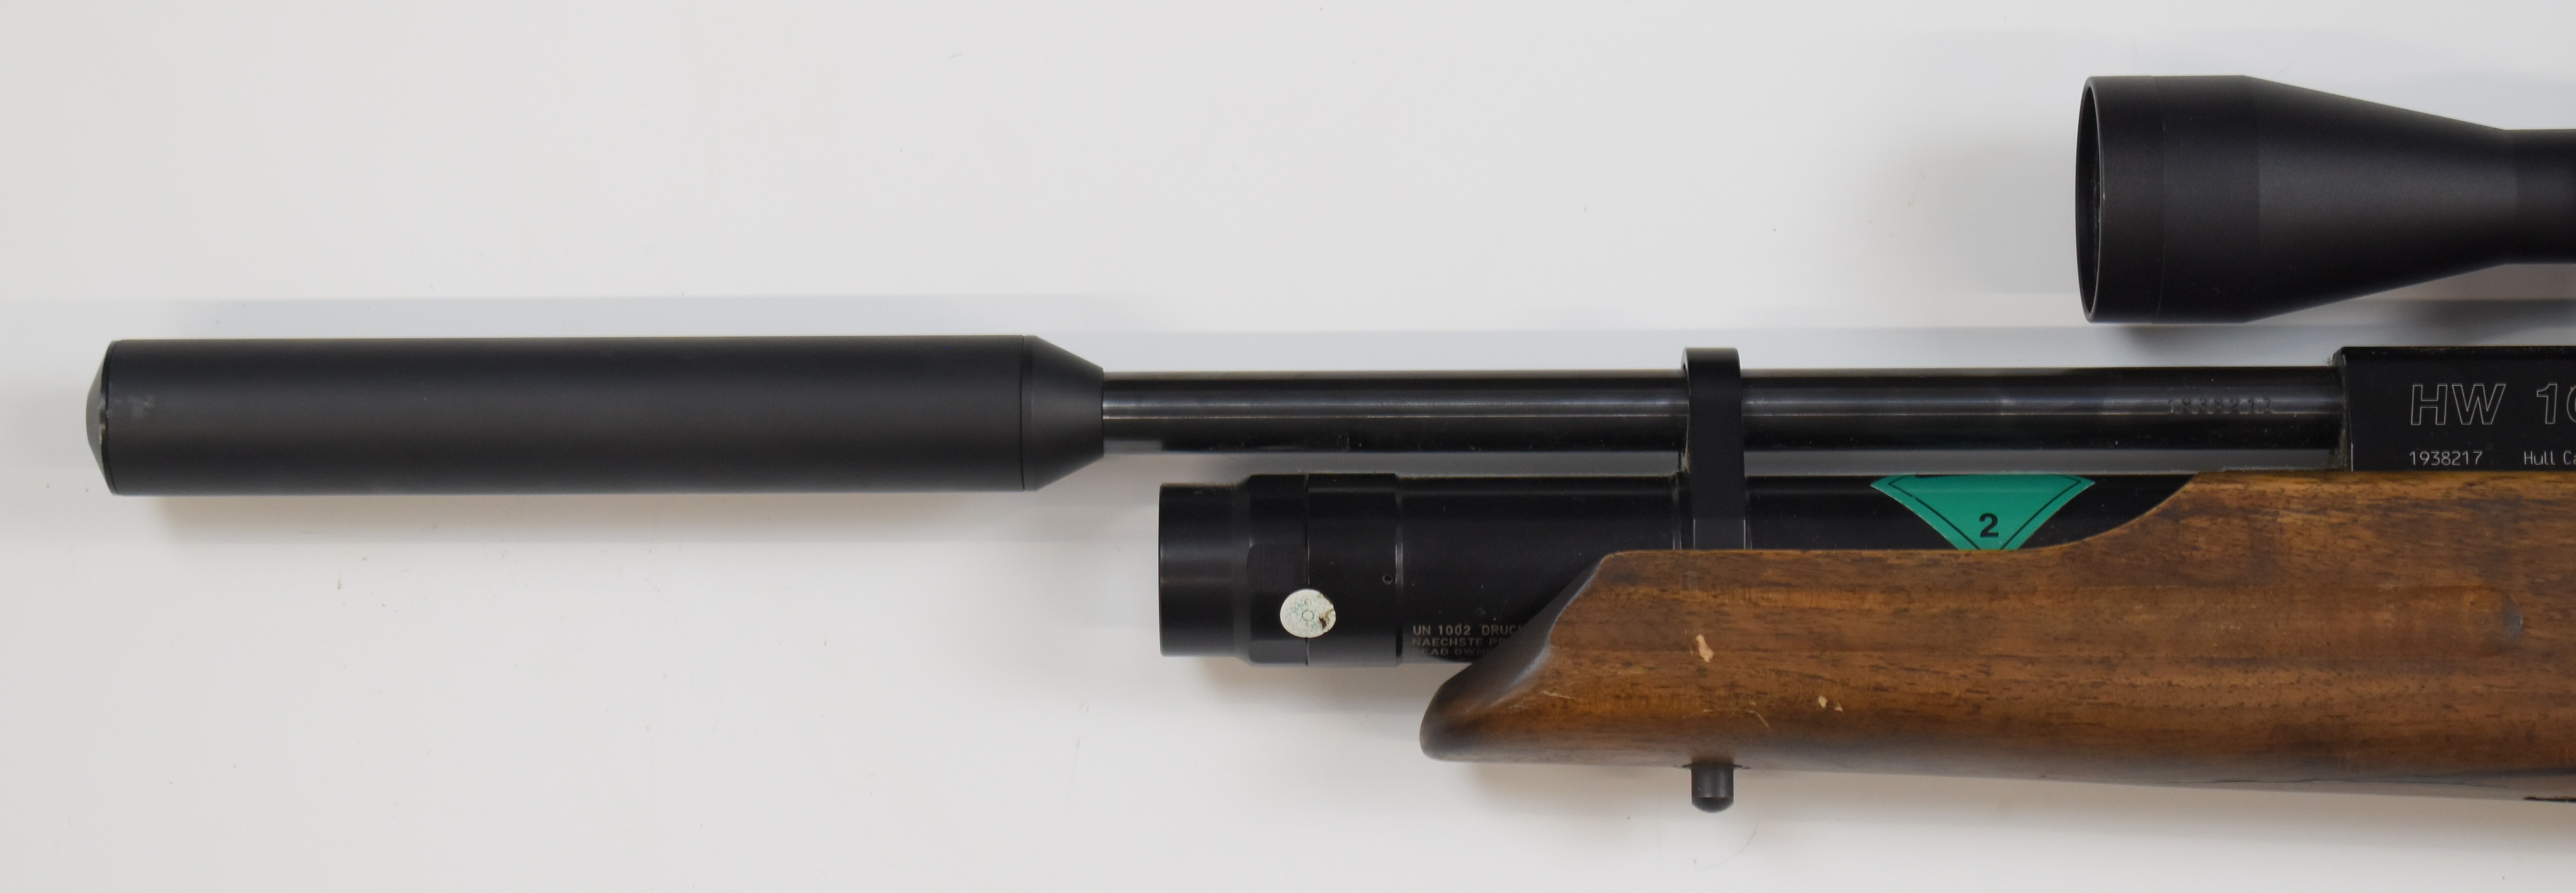 Weihrauch HW100 .22 PCP air rifle with textured semi-pistol grip, raised cheek piece, adjustable - Image 9 of 11